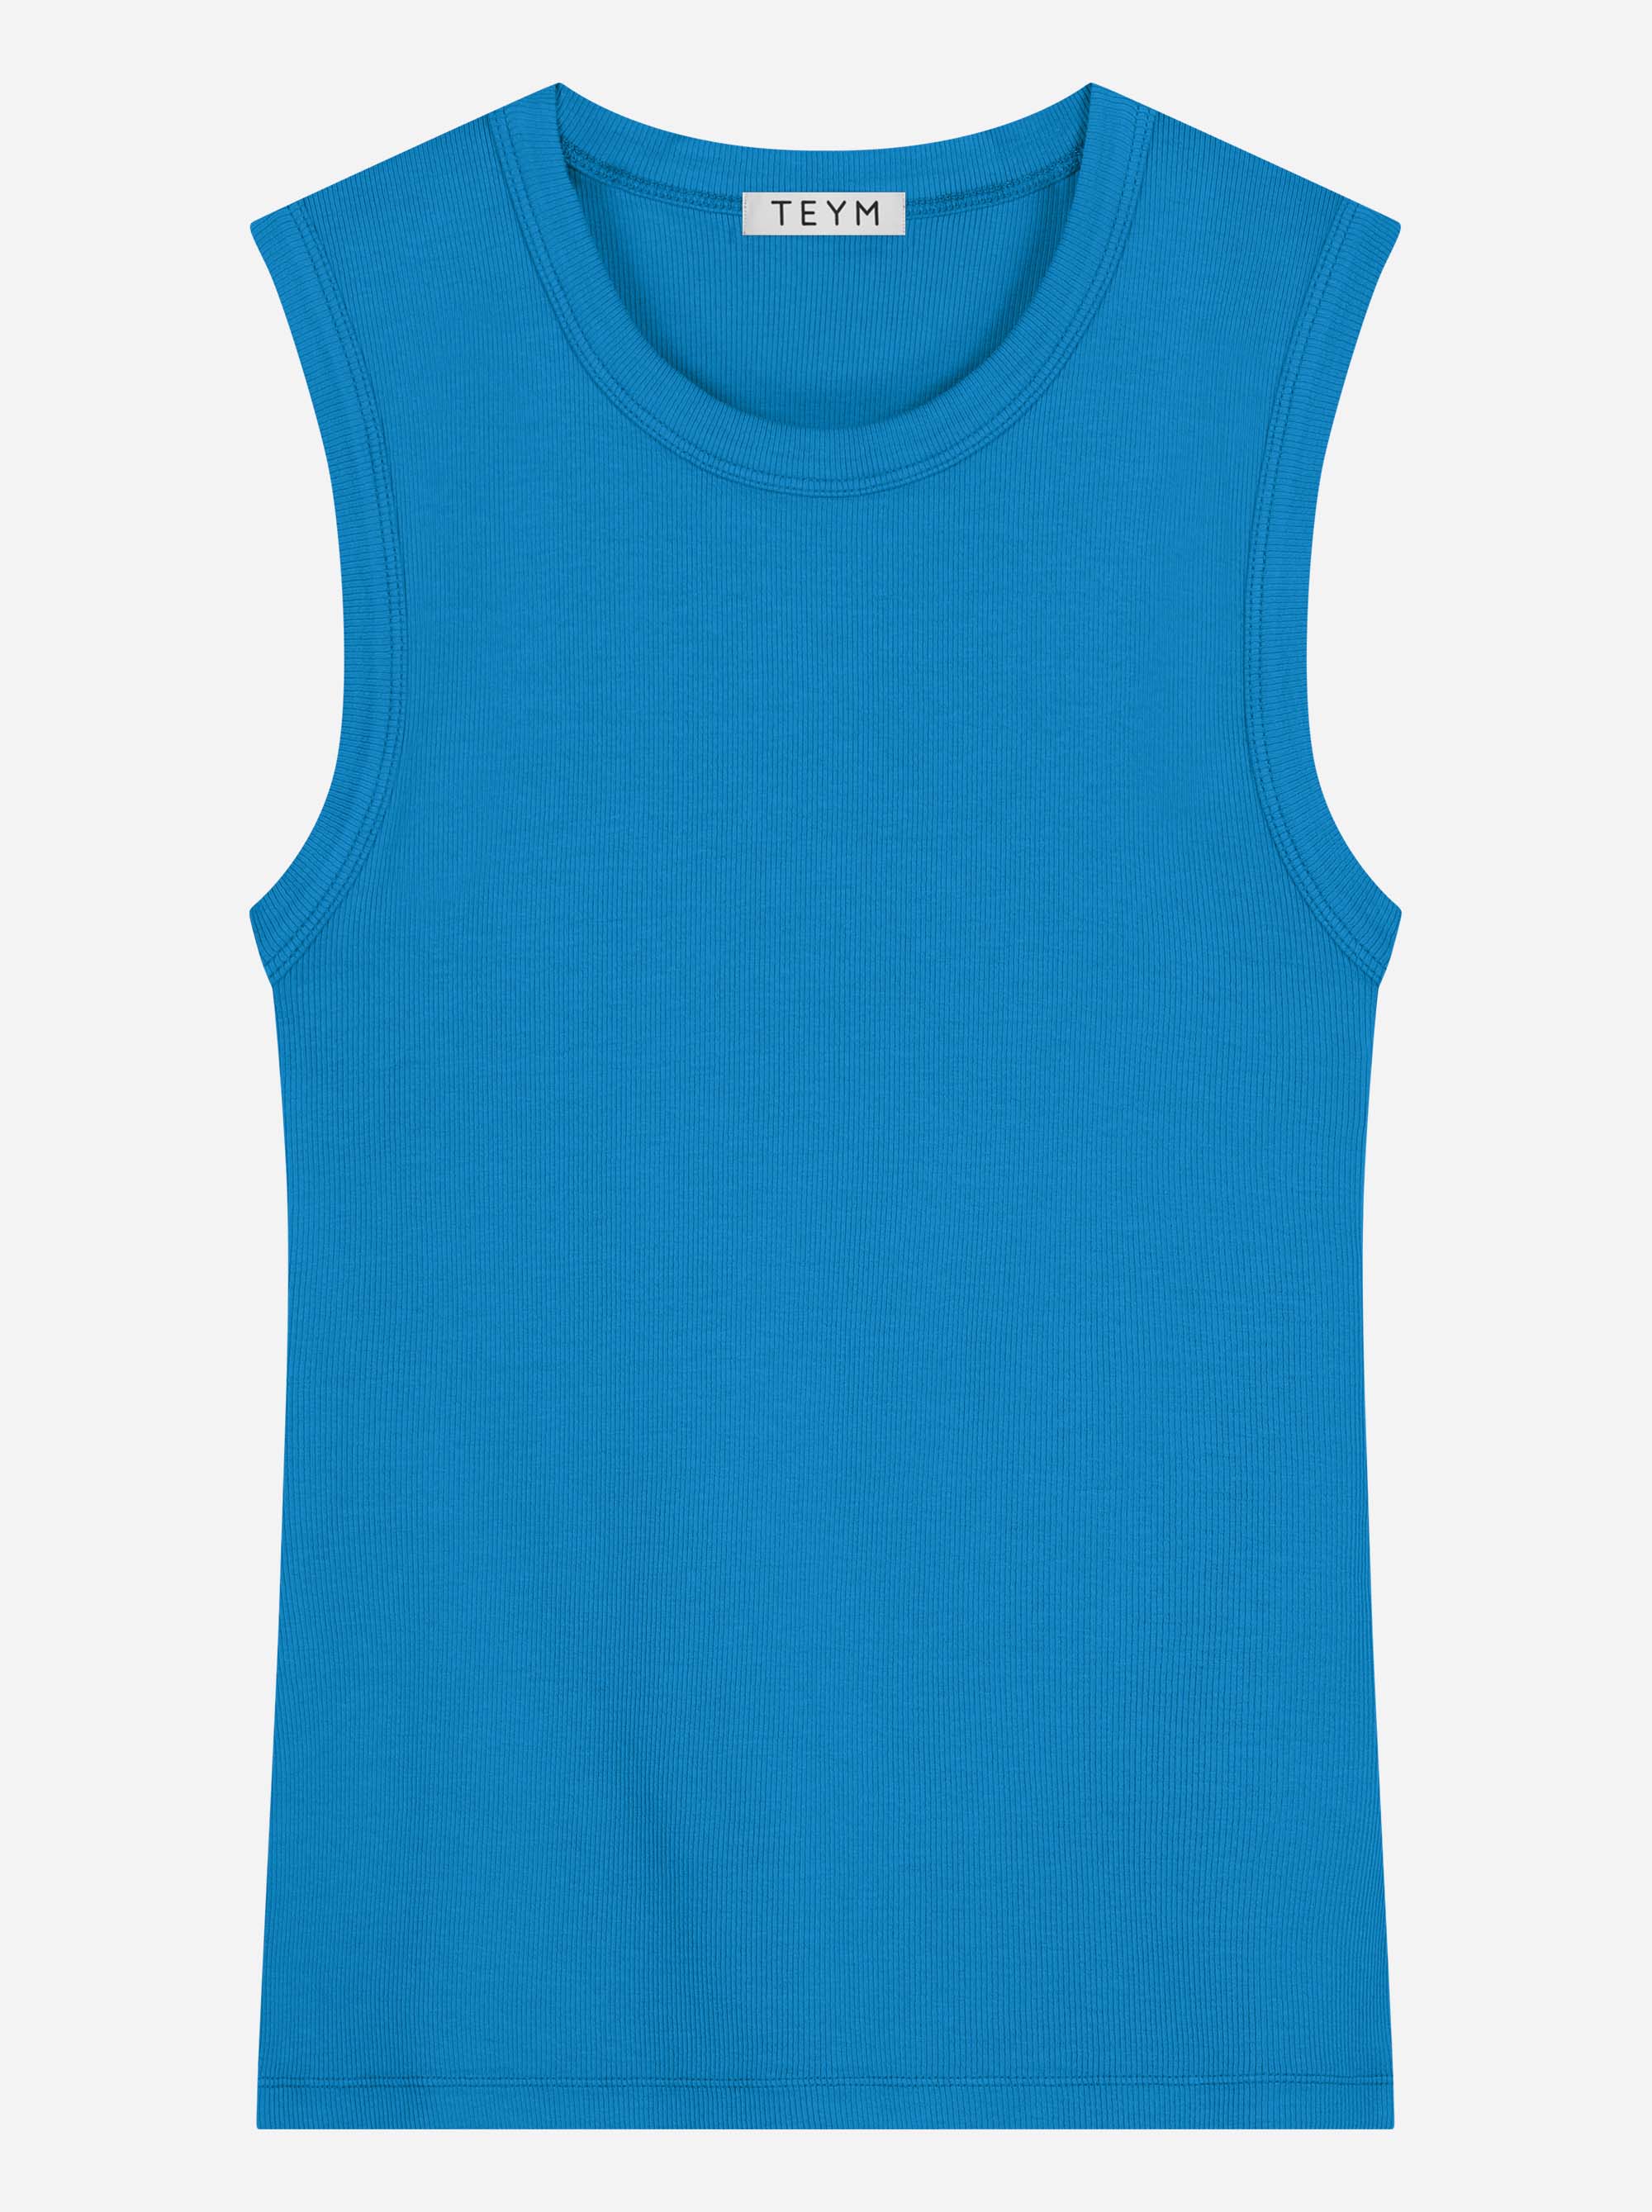 Teym - The Sleeveless T-Shirt - Women - Azure